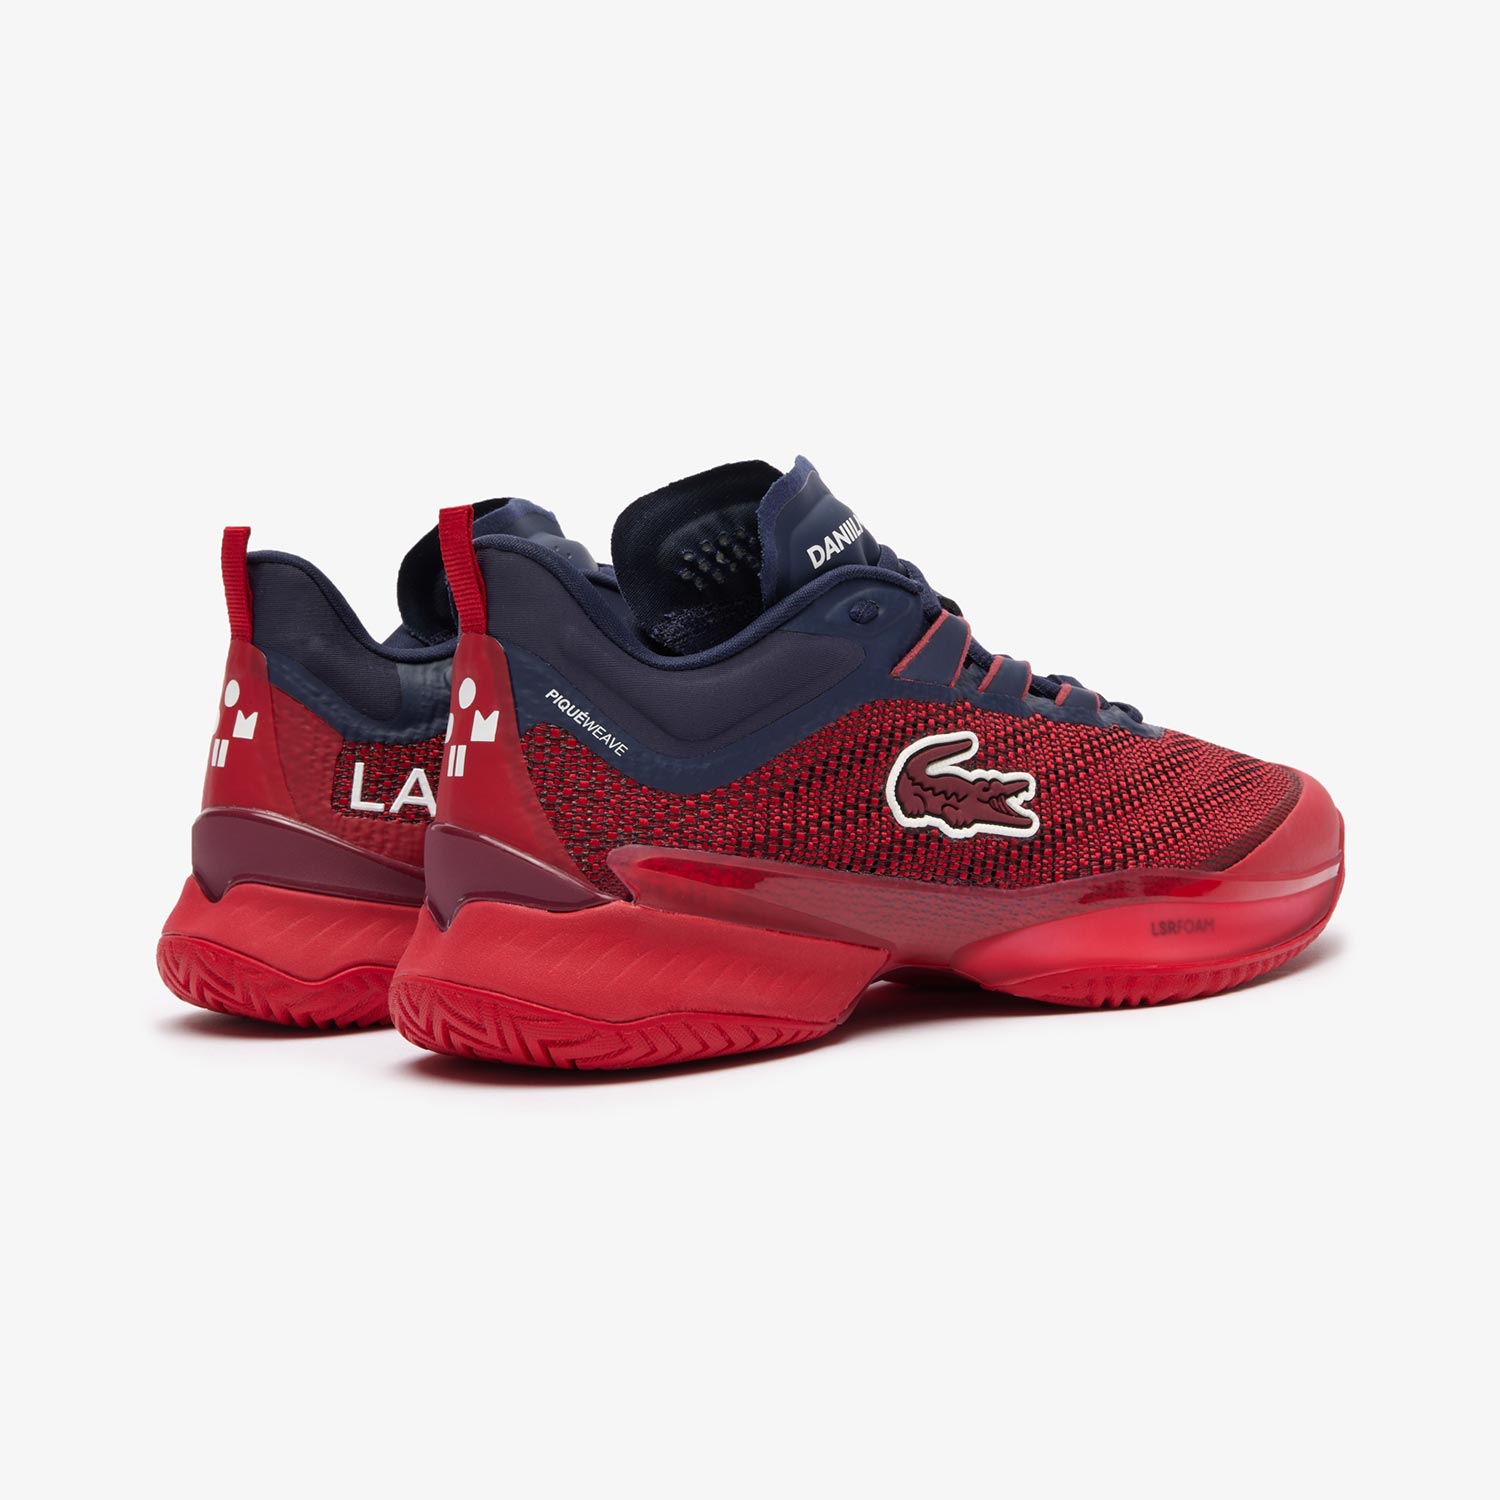 Lacoste AG-LT23 Ultra Men's Tennis Shoes - Red (4)